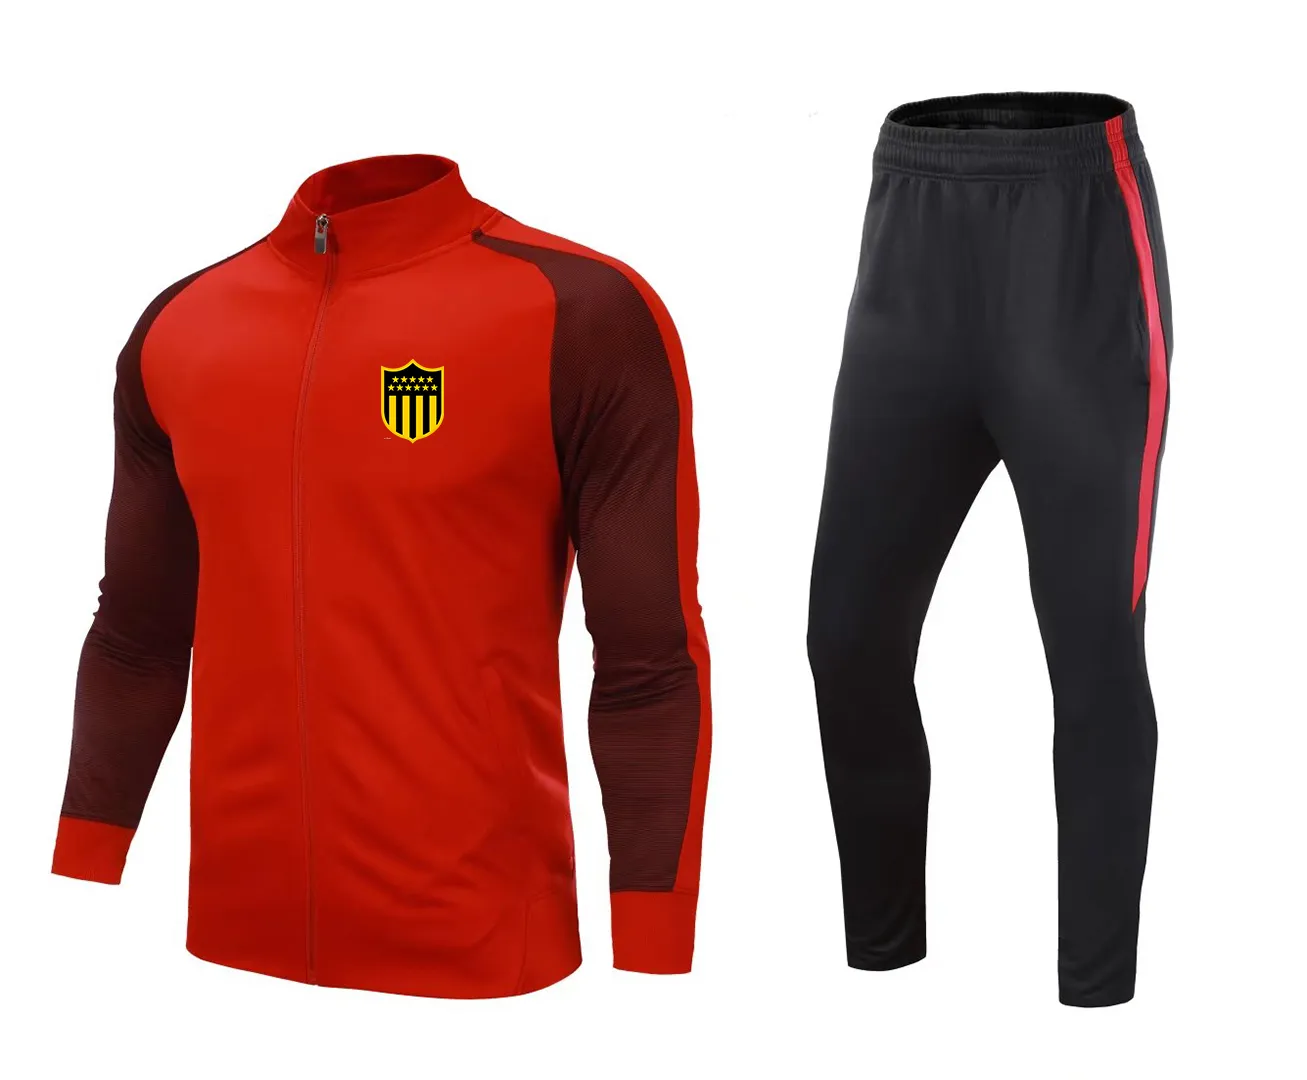 22 Club Atletico Penarol Penarol adult leisure tracksuit jacket men Outdoor sports training suit Kids Outdoor Sets Home Kits